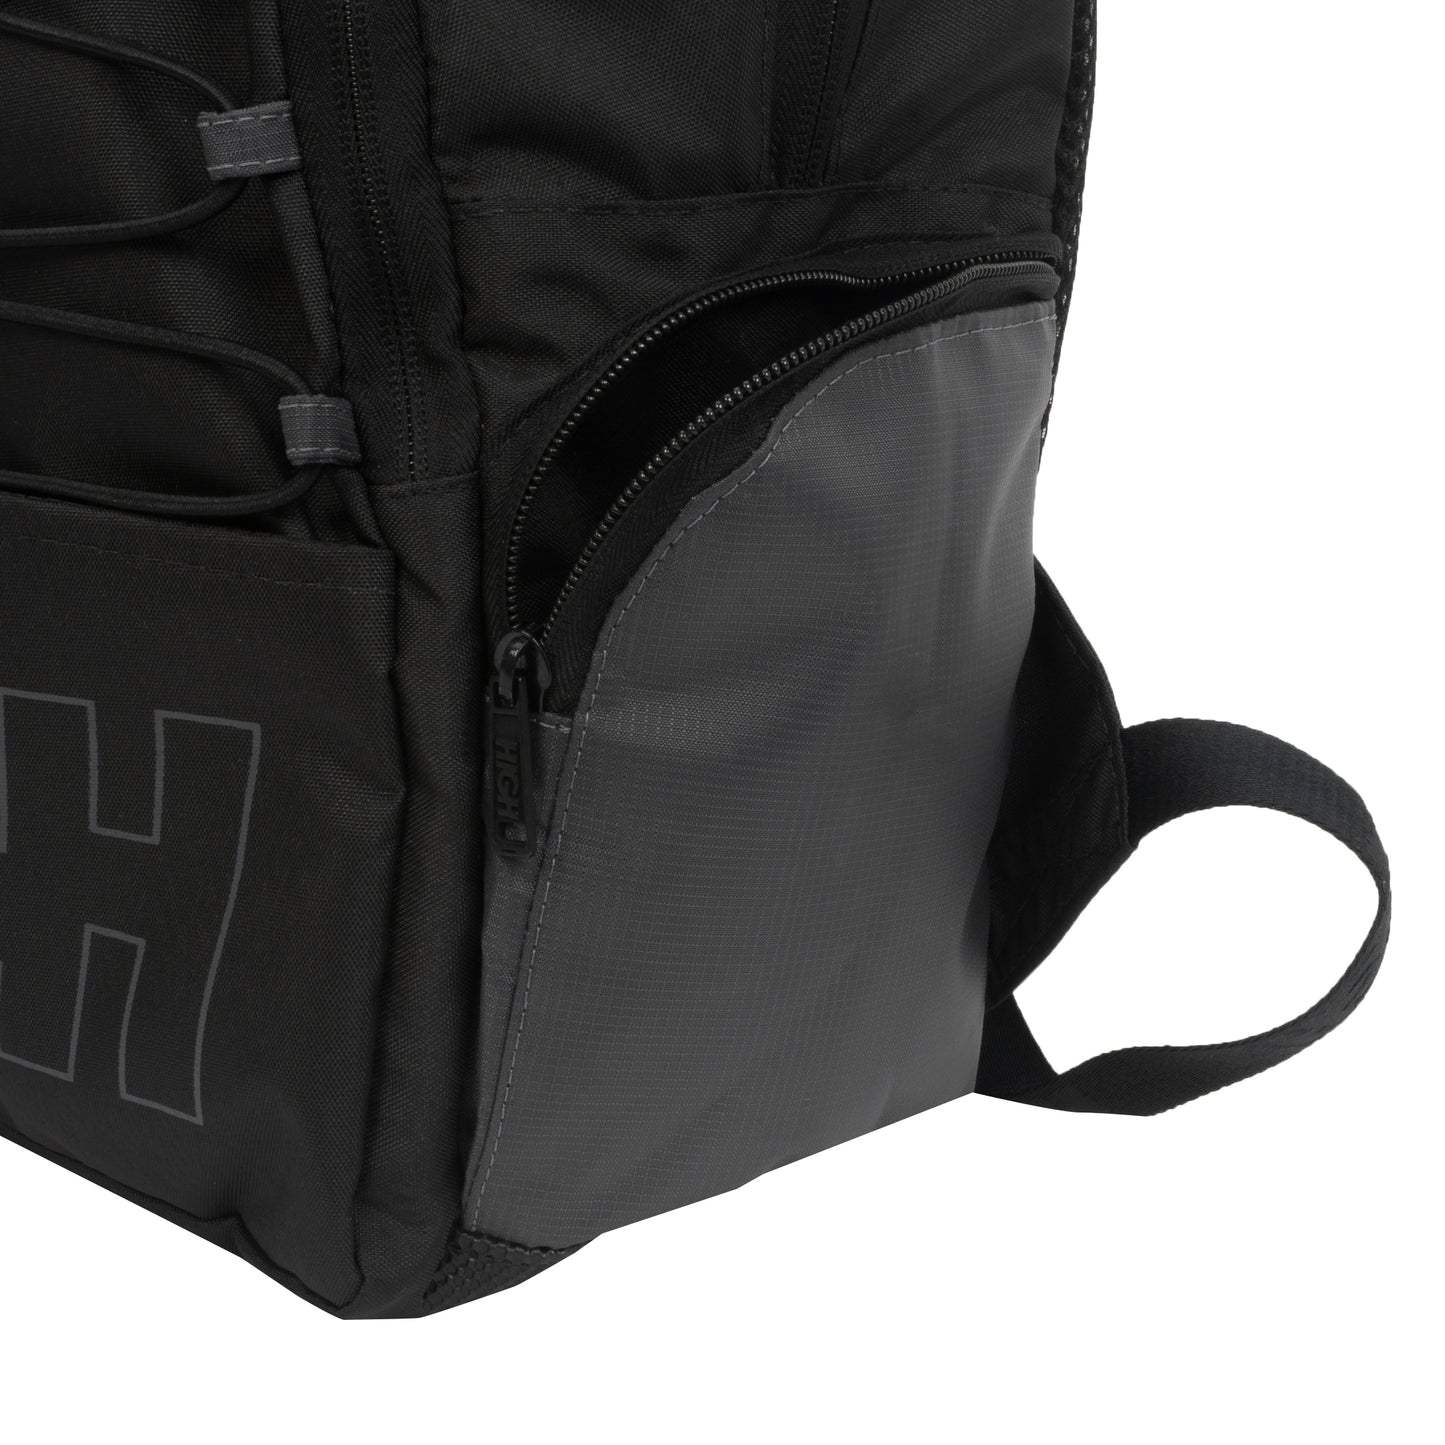 HIGH - Backpack Mountain Black